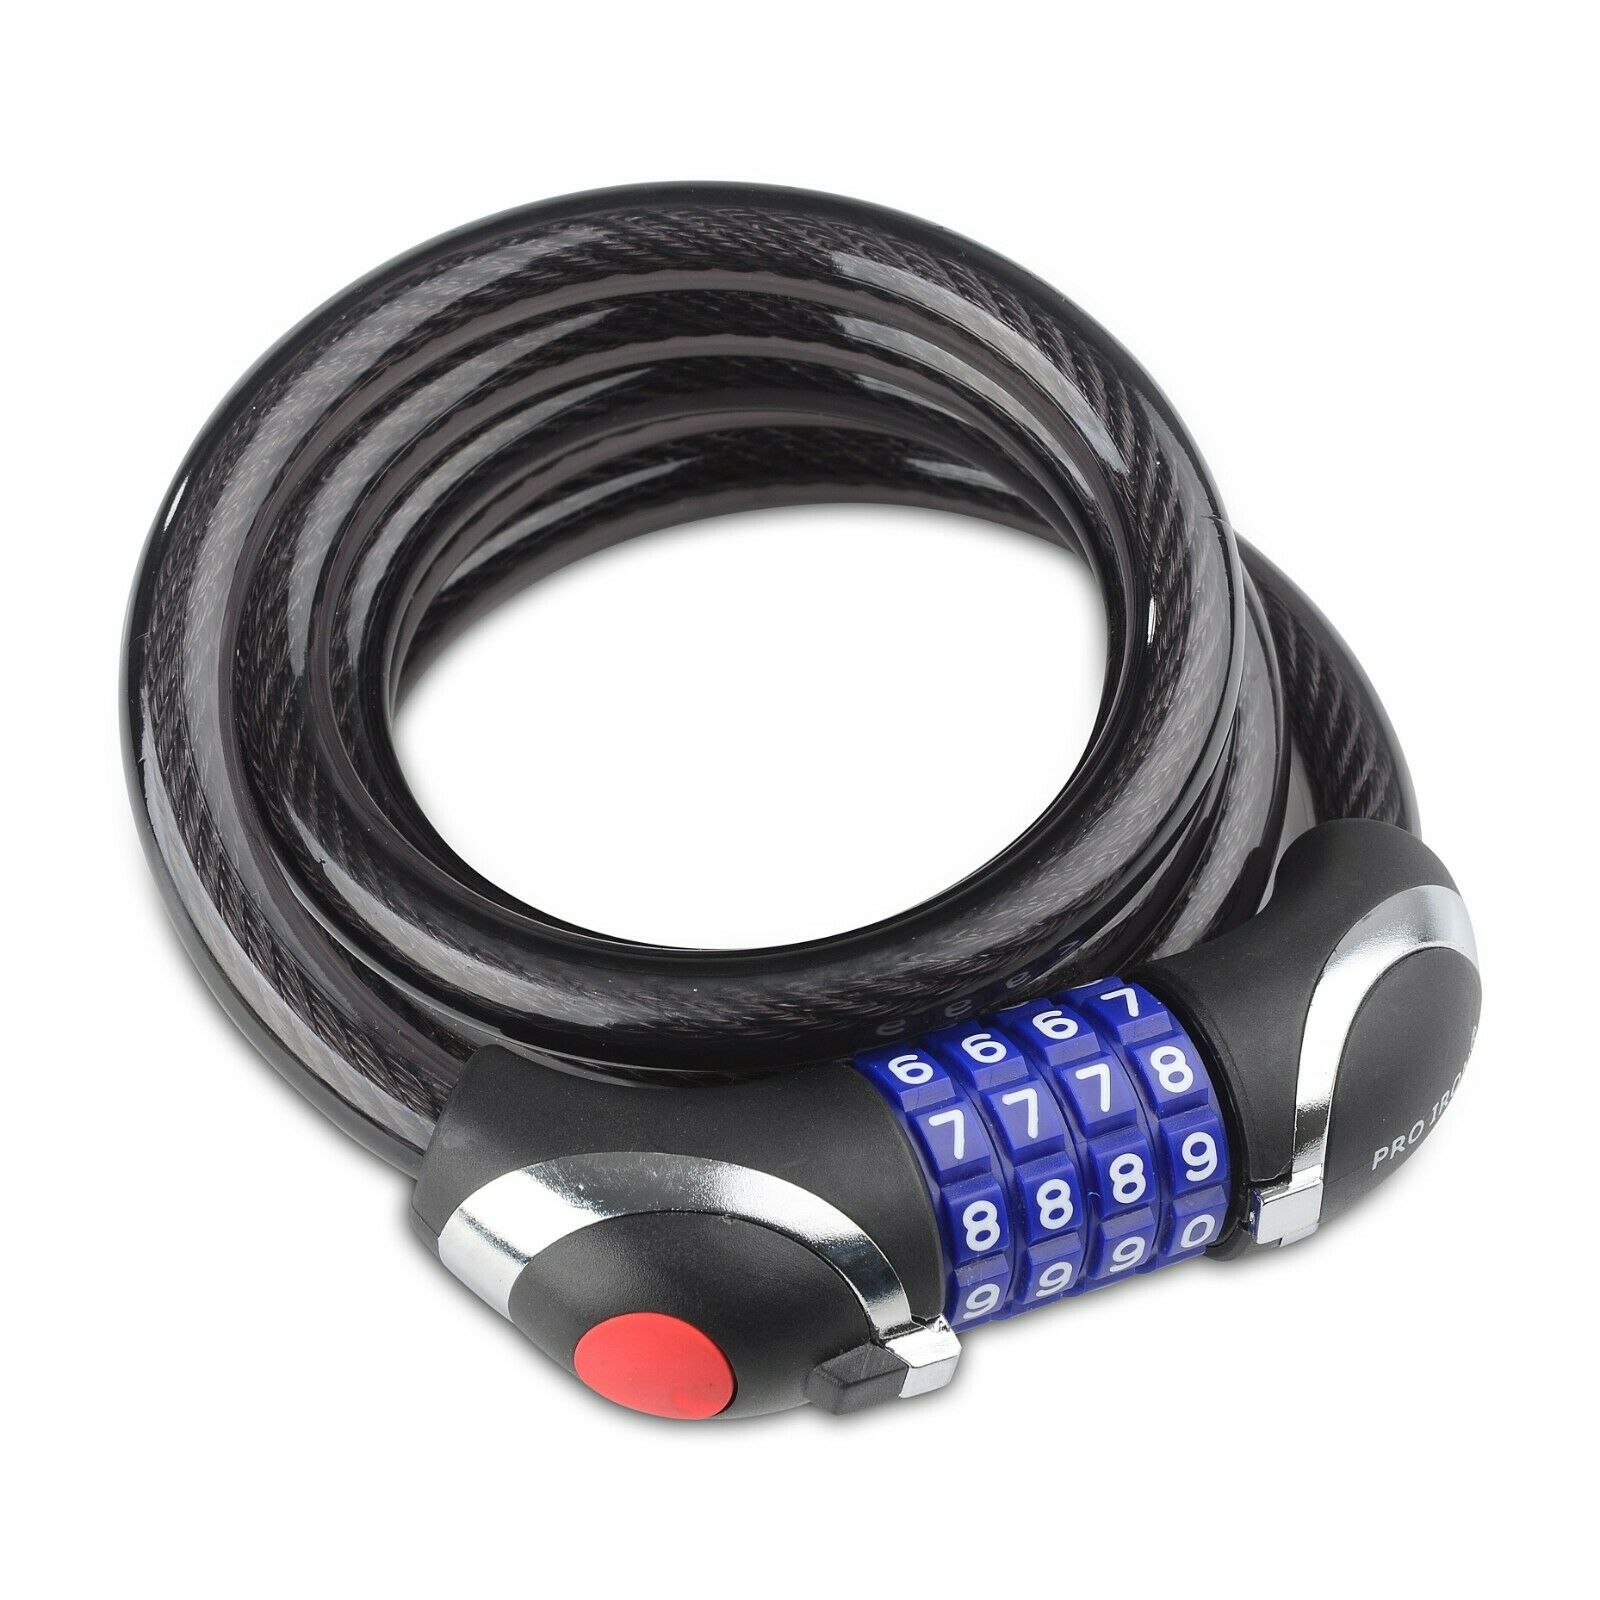 Pro Iron Bike Bicycle Security Cable Lock W/ Led Light Combo Combination Locking